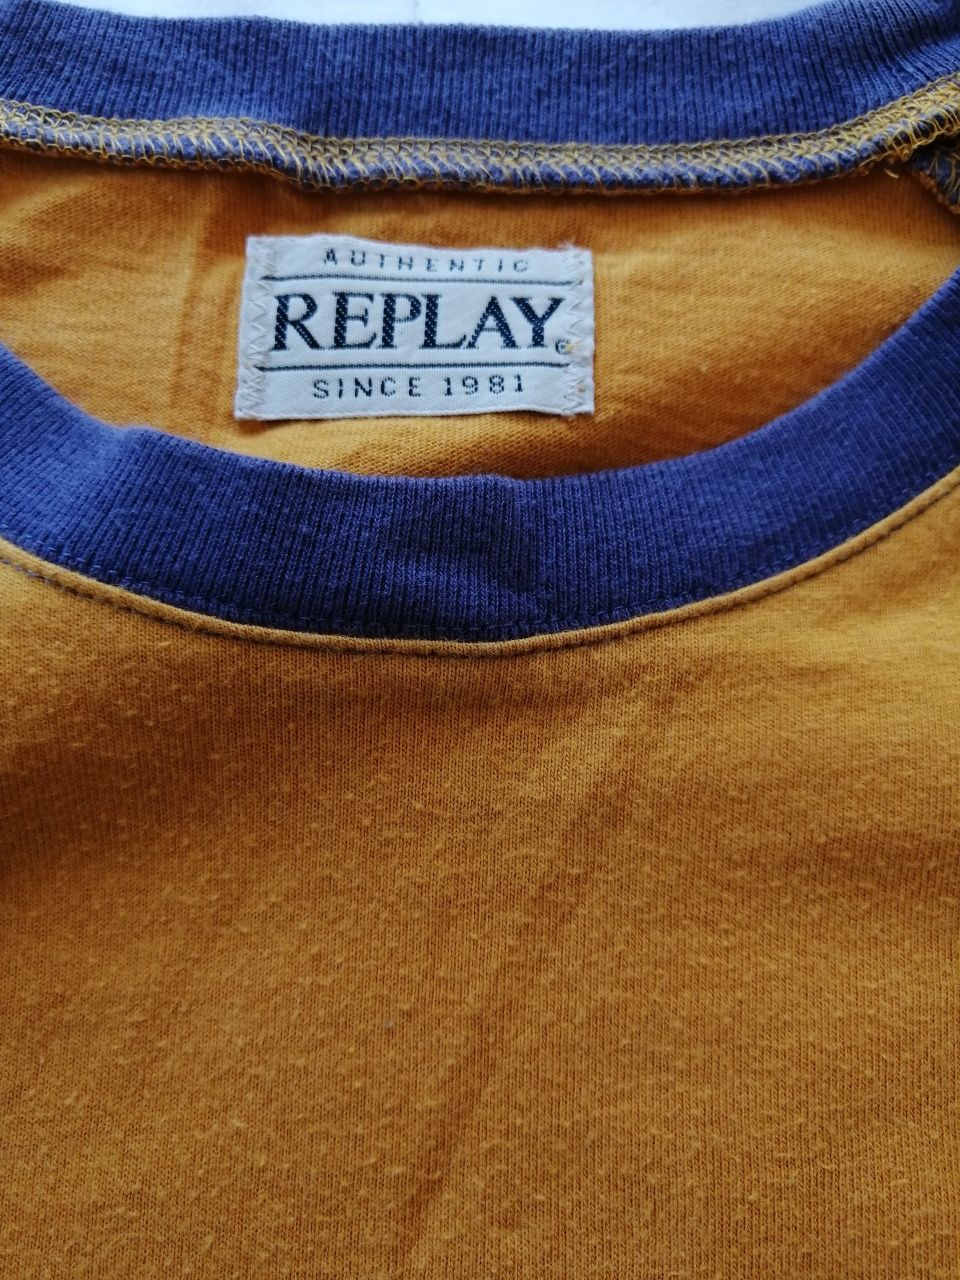 Sweatshirt da Replay